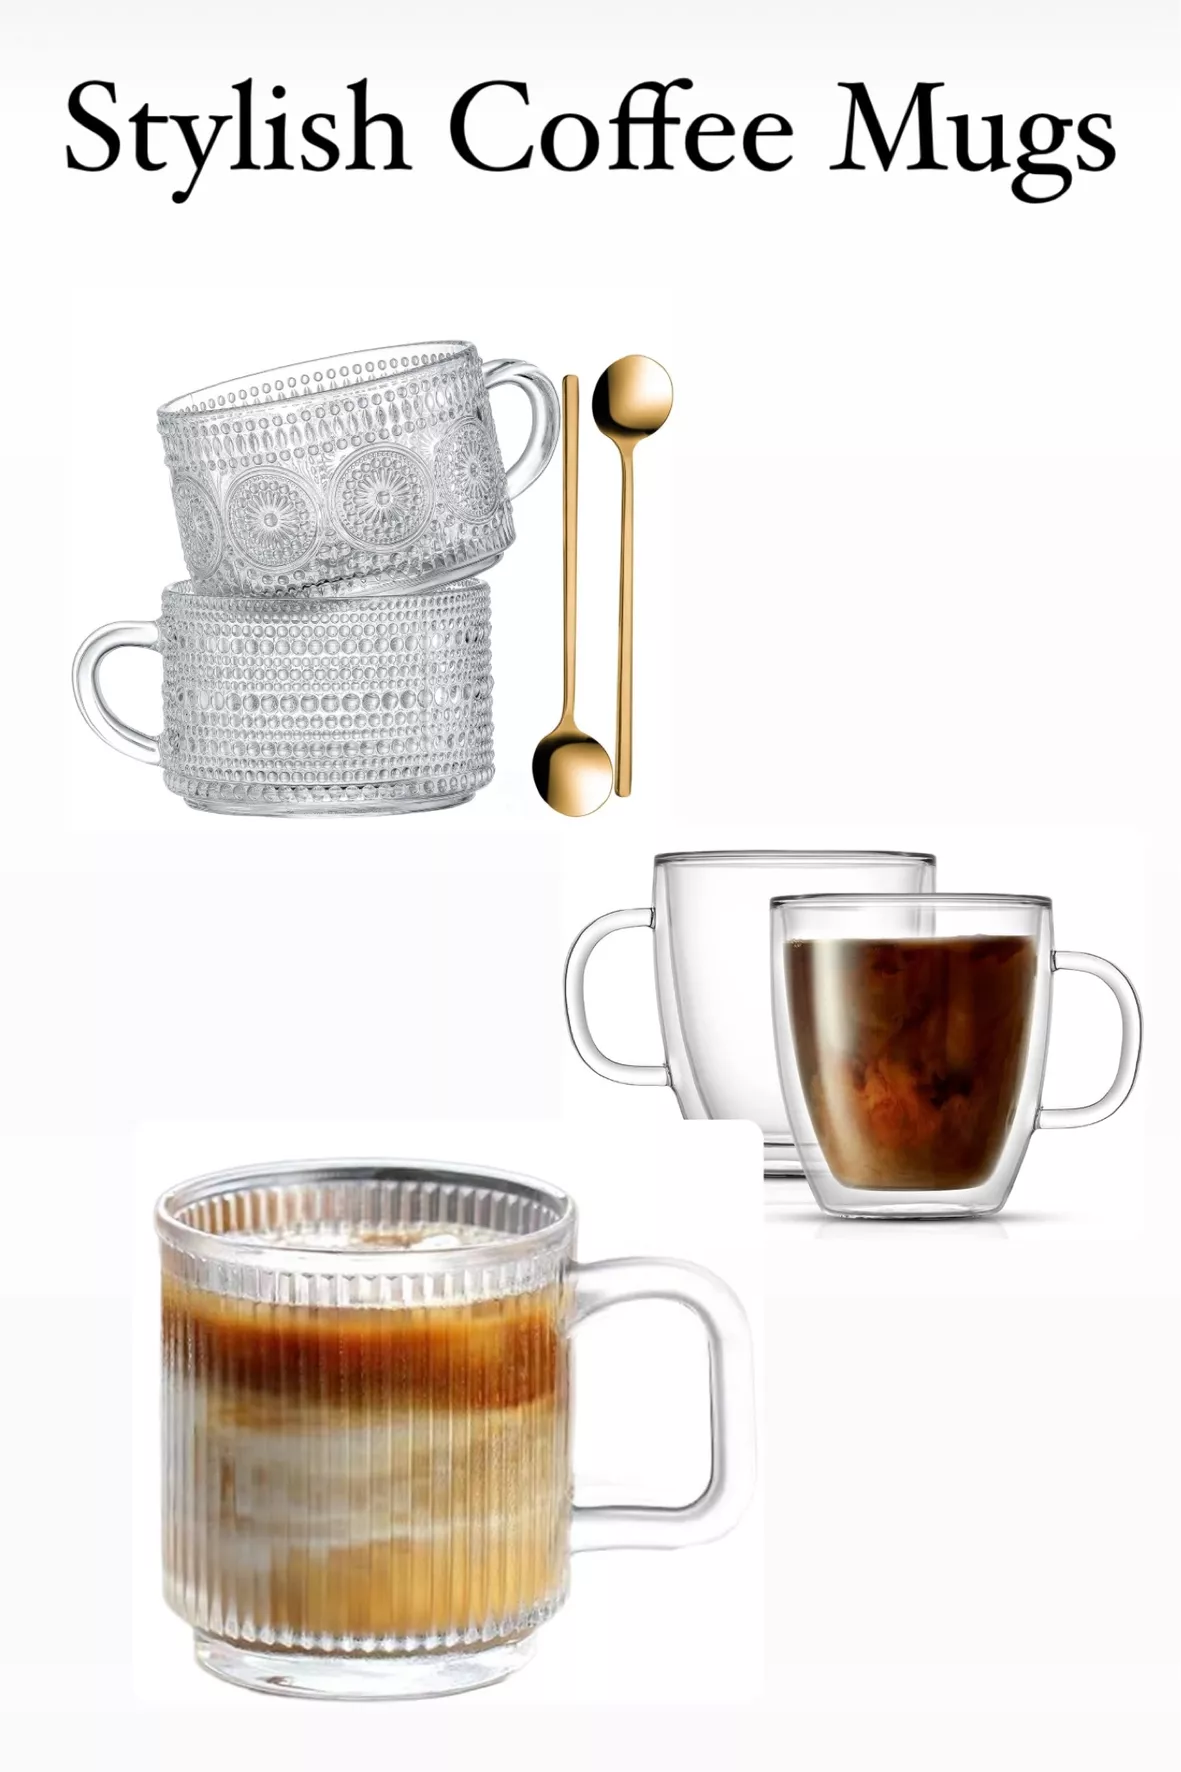 Aquach Double Wall Glass Coffee Mug 12 oz, Large Clear Glass Cup